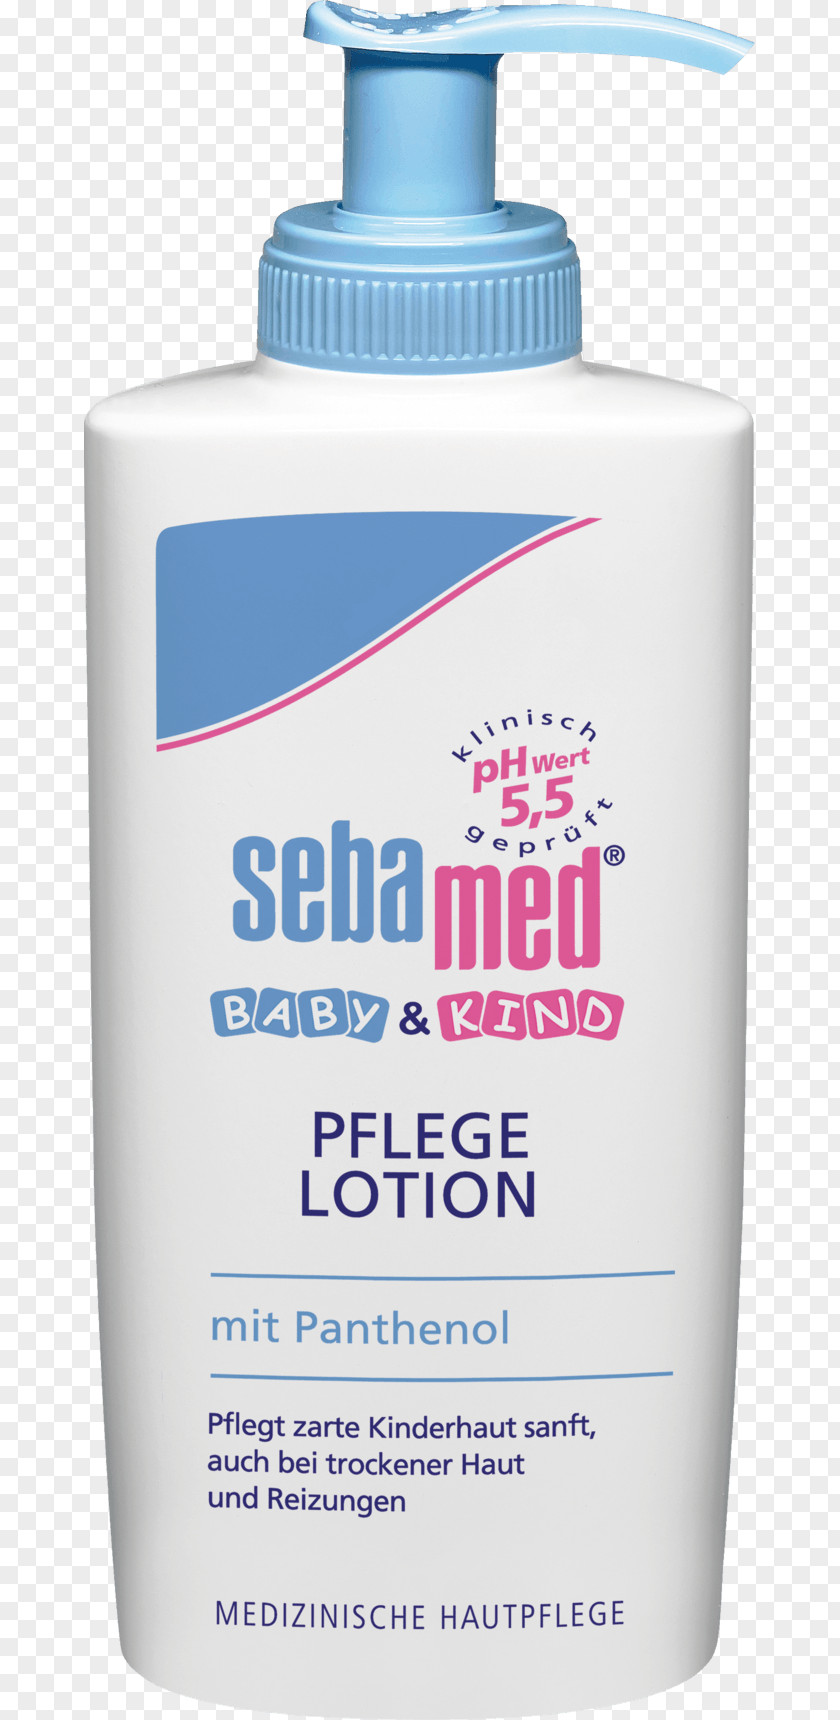 Shampoo Lotion Sebamed Hair Shower Gel PNG